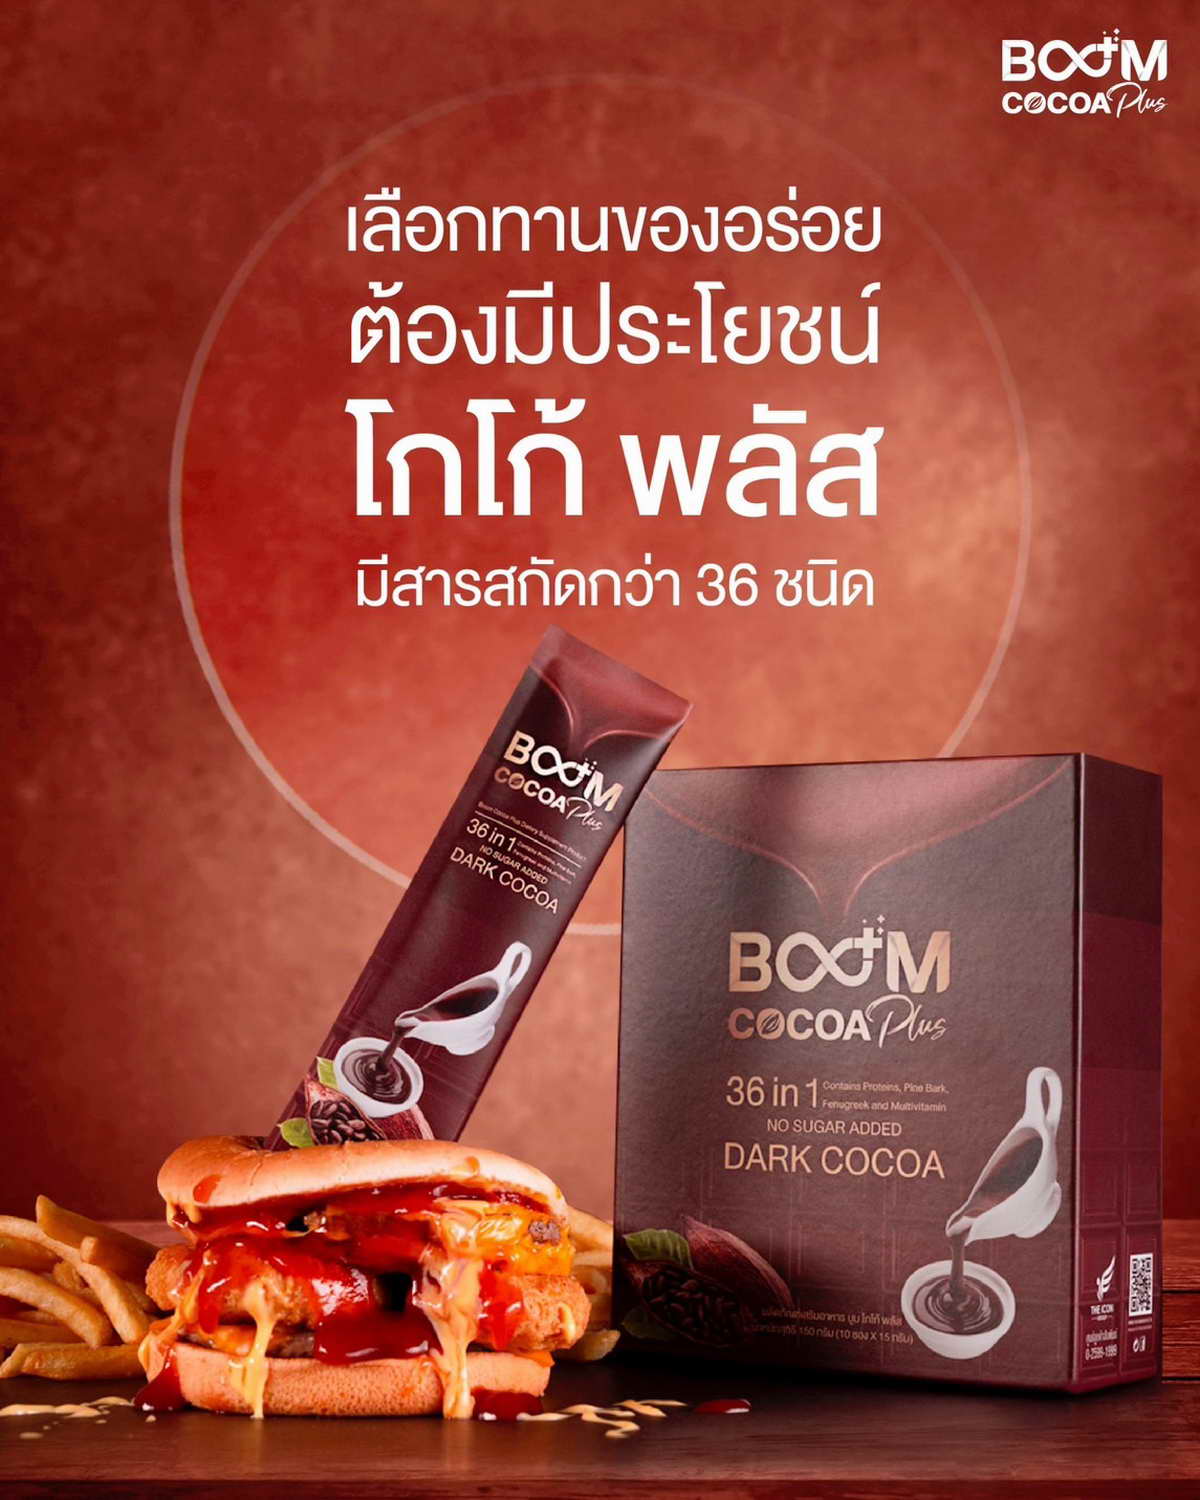 Boom Cocoa Plus มีประโยชน์จากสารสกัดกว่า 36 ชนิด